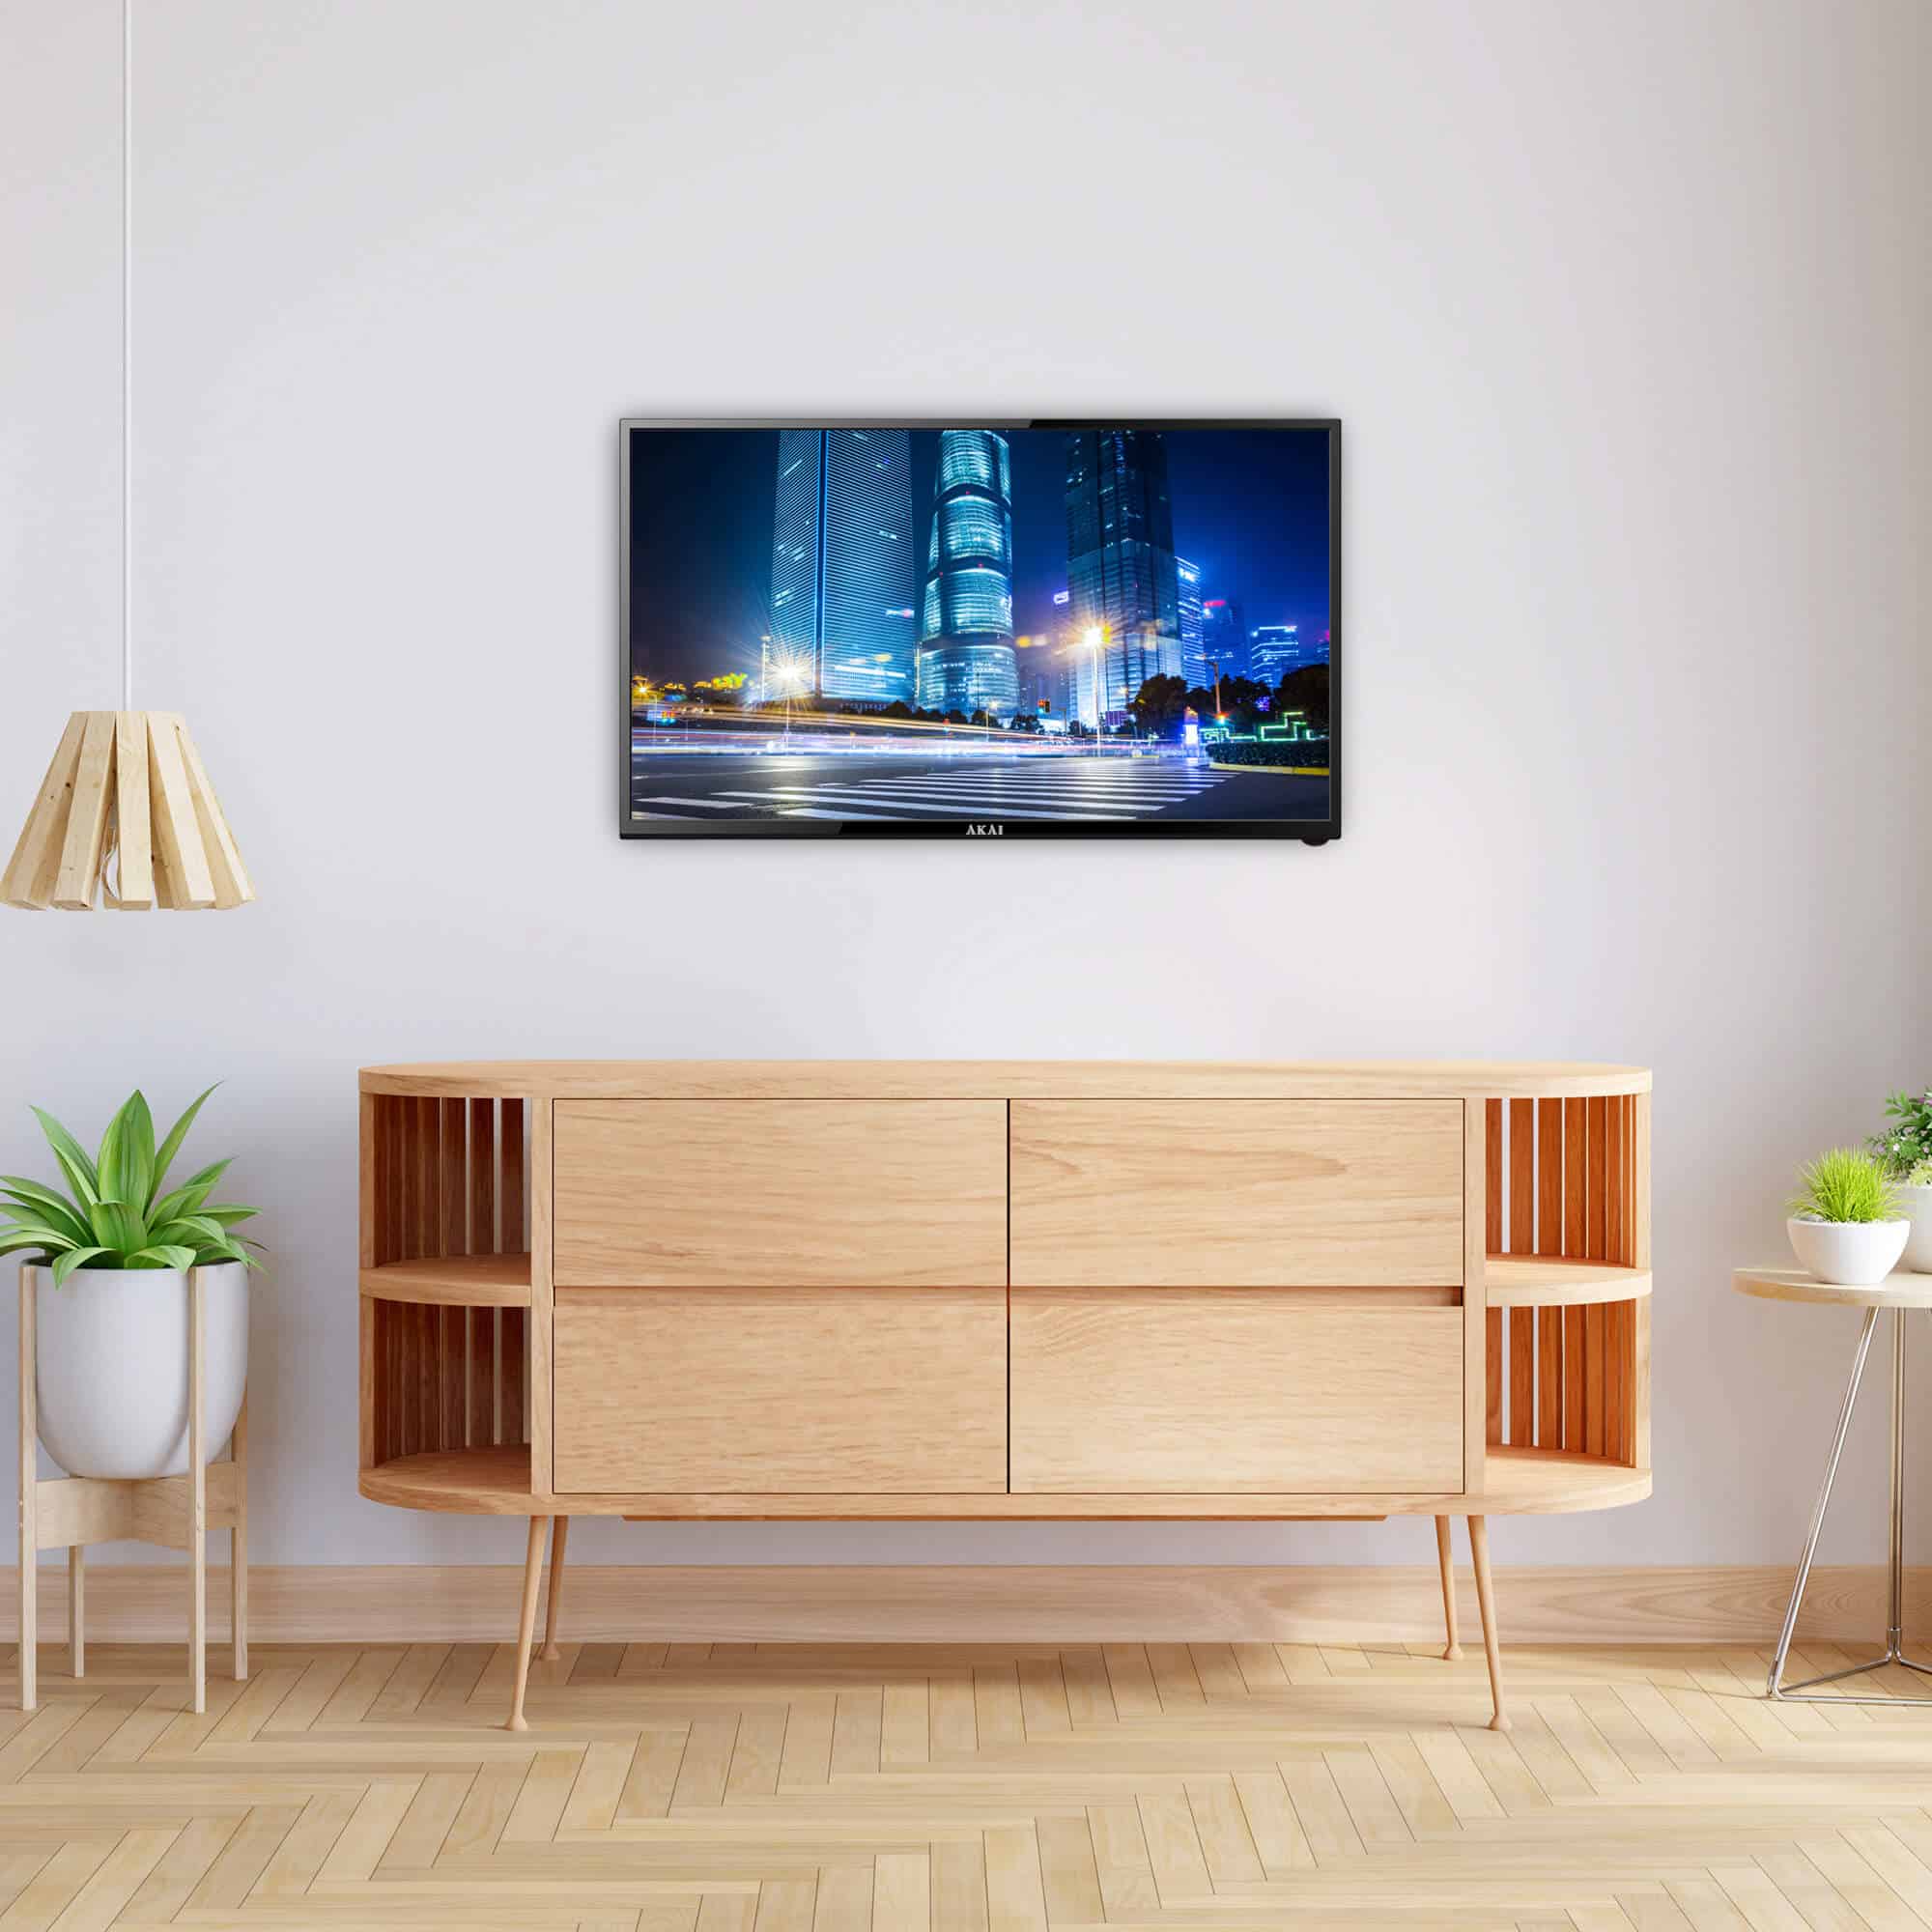 Akai 24Inch HD LED Smart TV - H&G